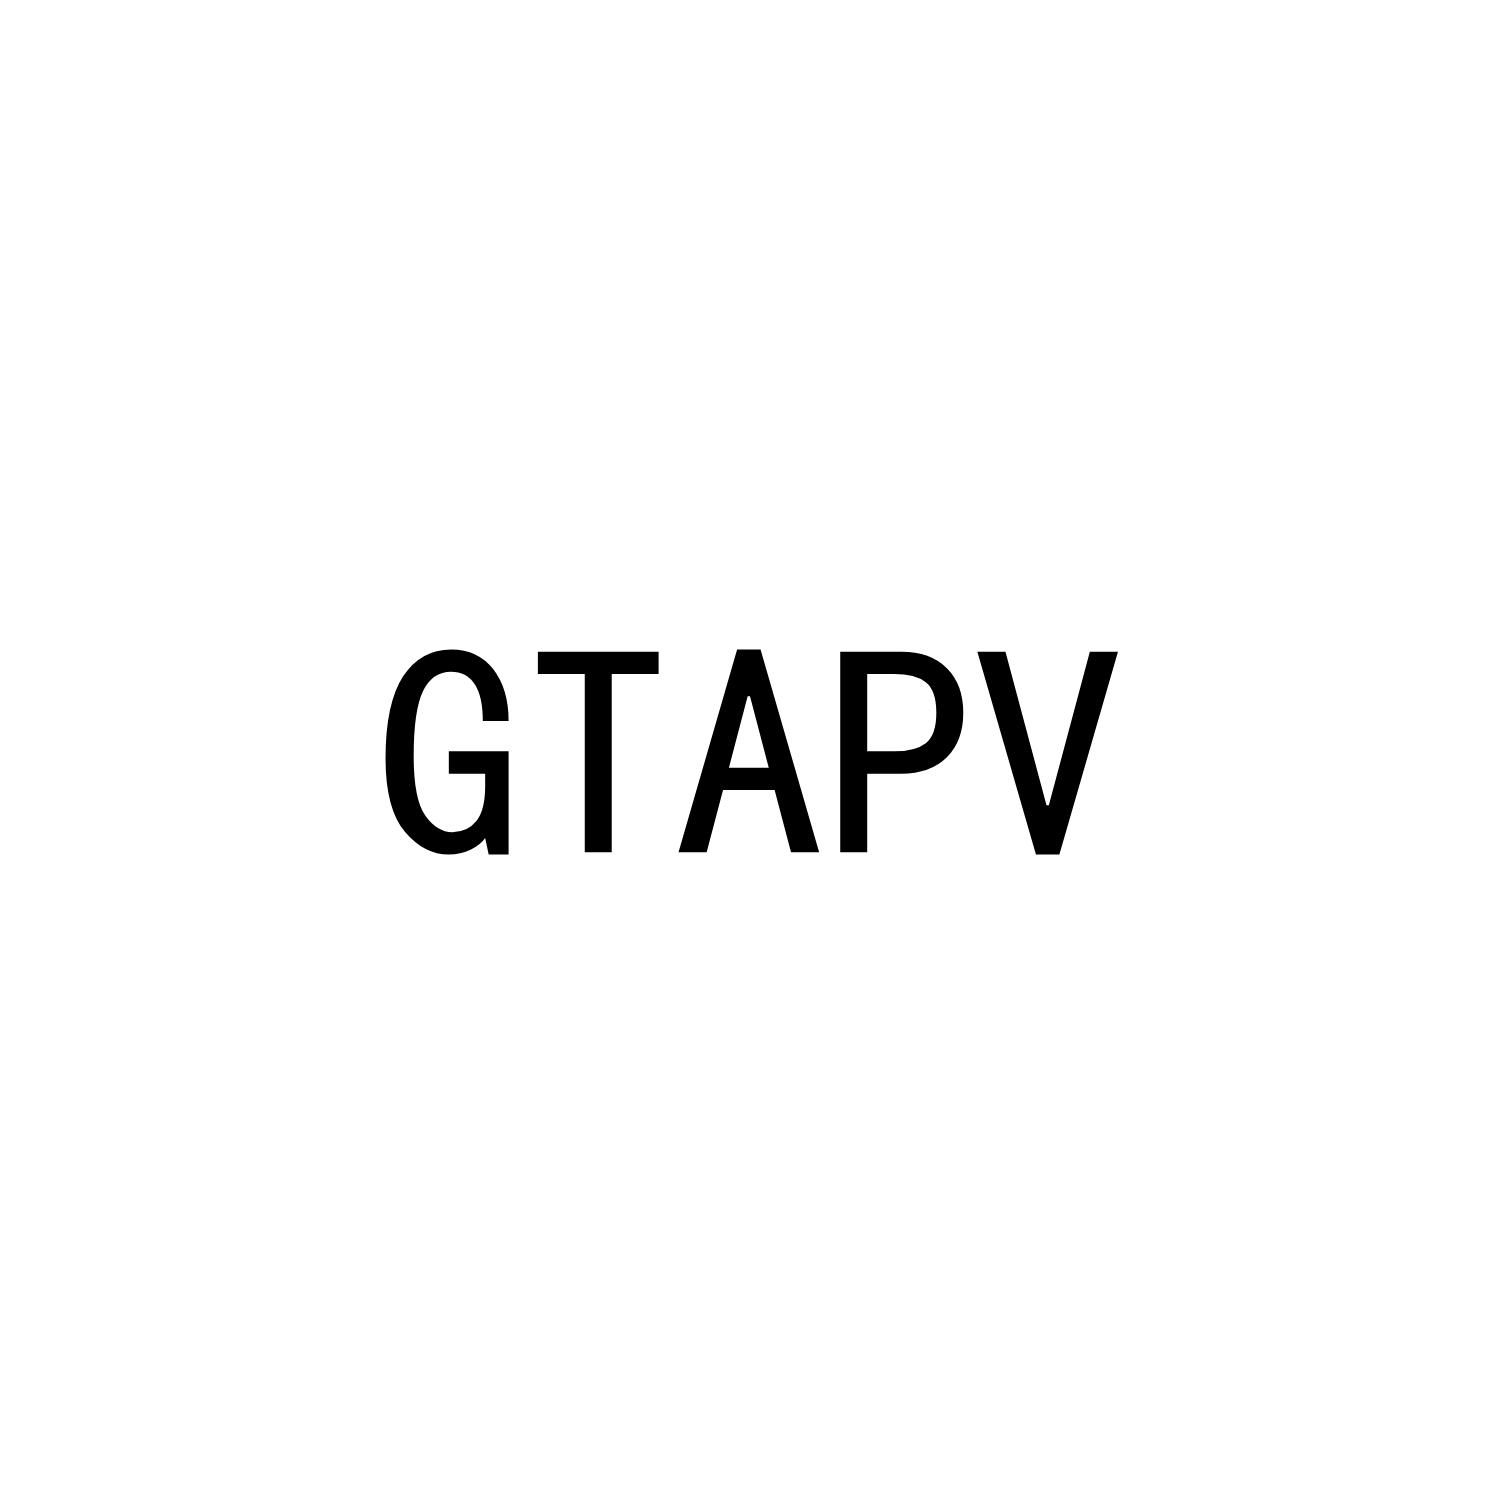 GTAPV